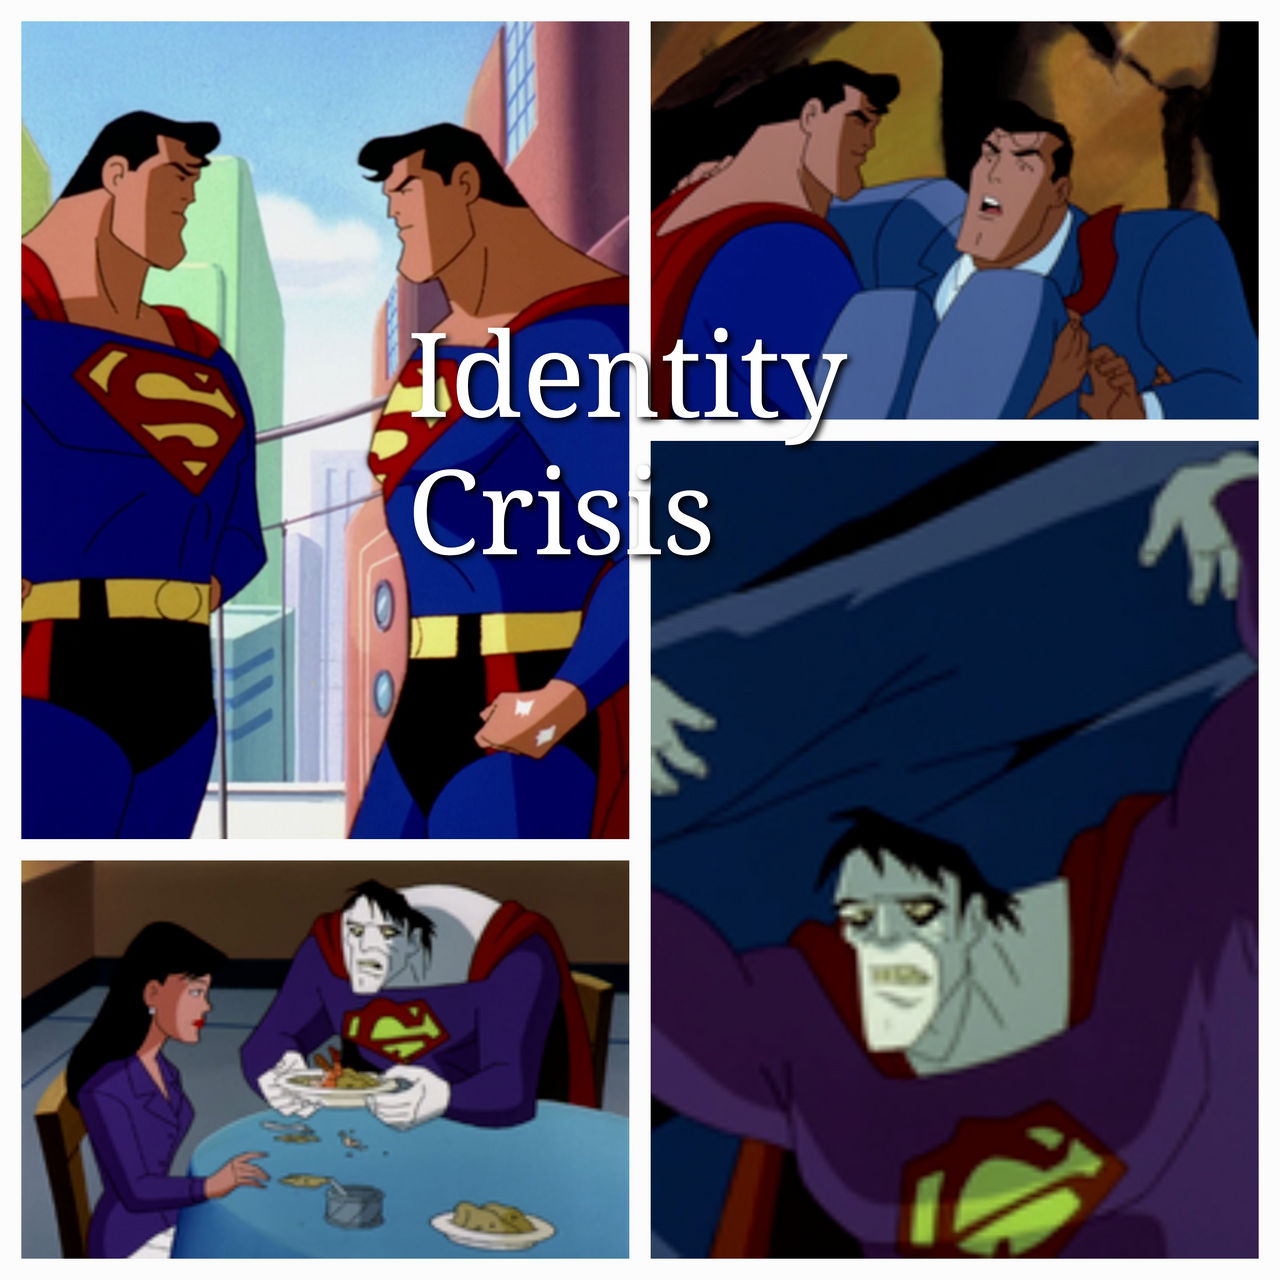 Superman tas Identity Crisis by xxxkayceejrxxx on DeviantArt